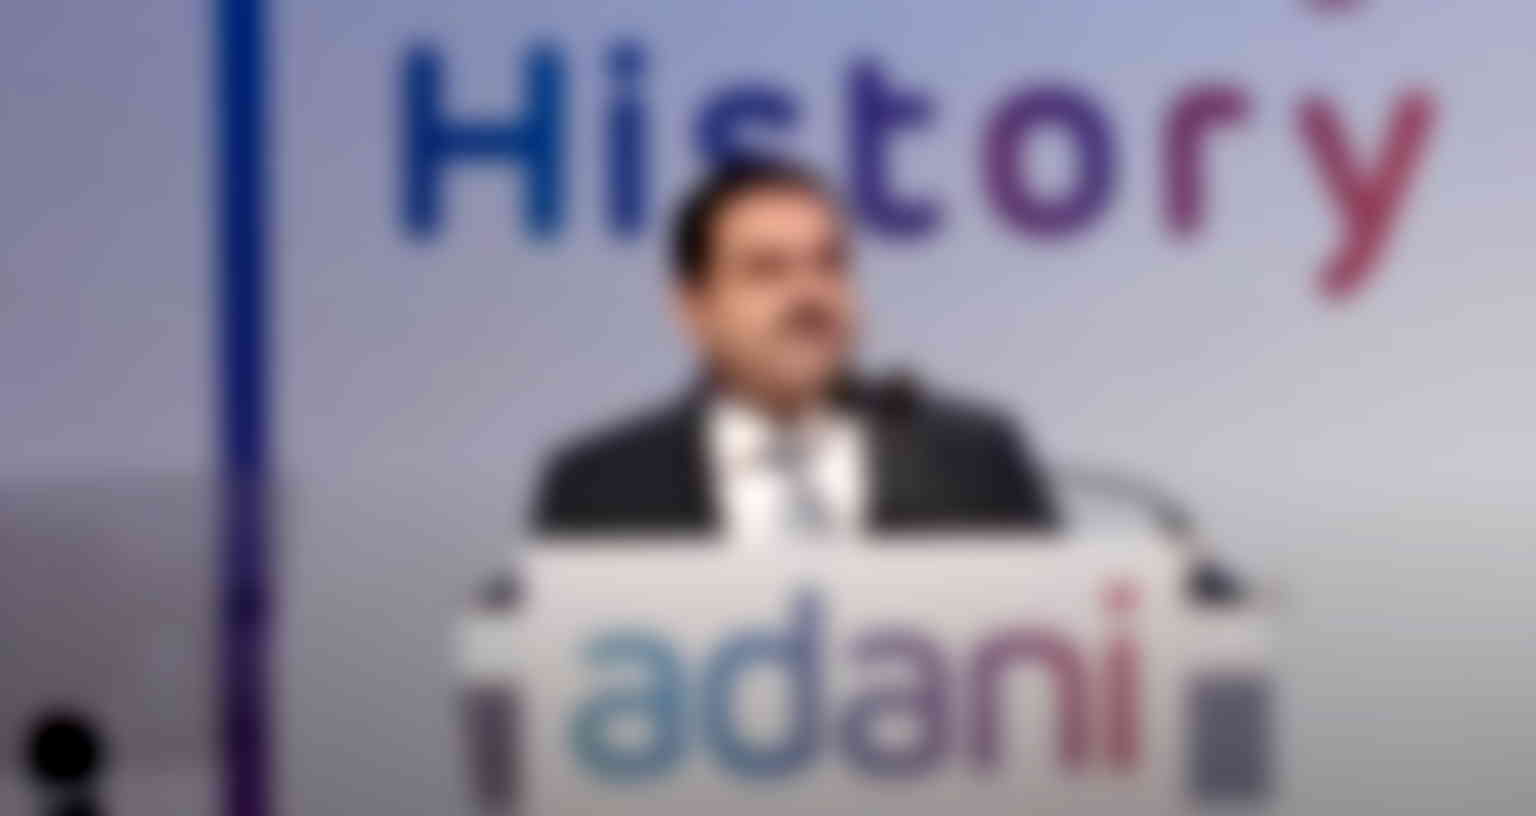 Indian tycoon Gautam Adani surpasses Jeff Bezos as world’s second-richest person